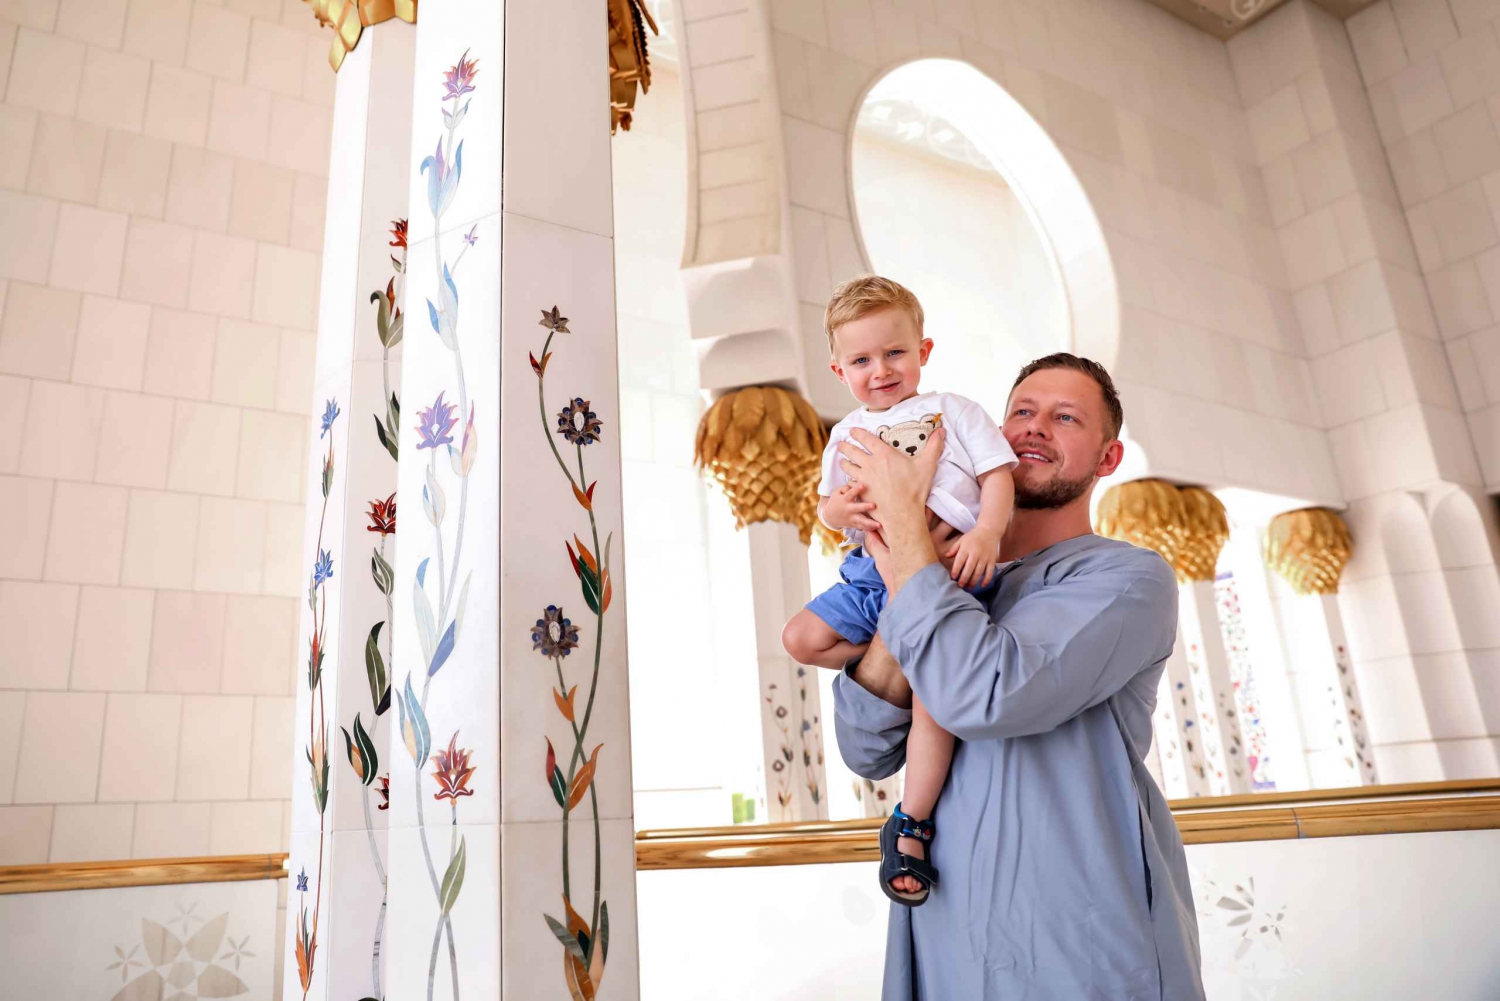 Abu Dhabi: Professional Photoshoot at Sheikh Zayed Mosque